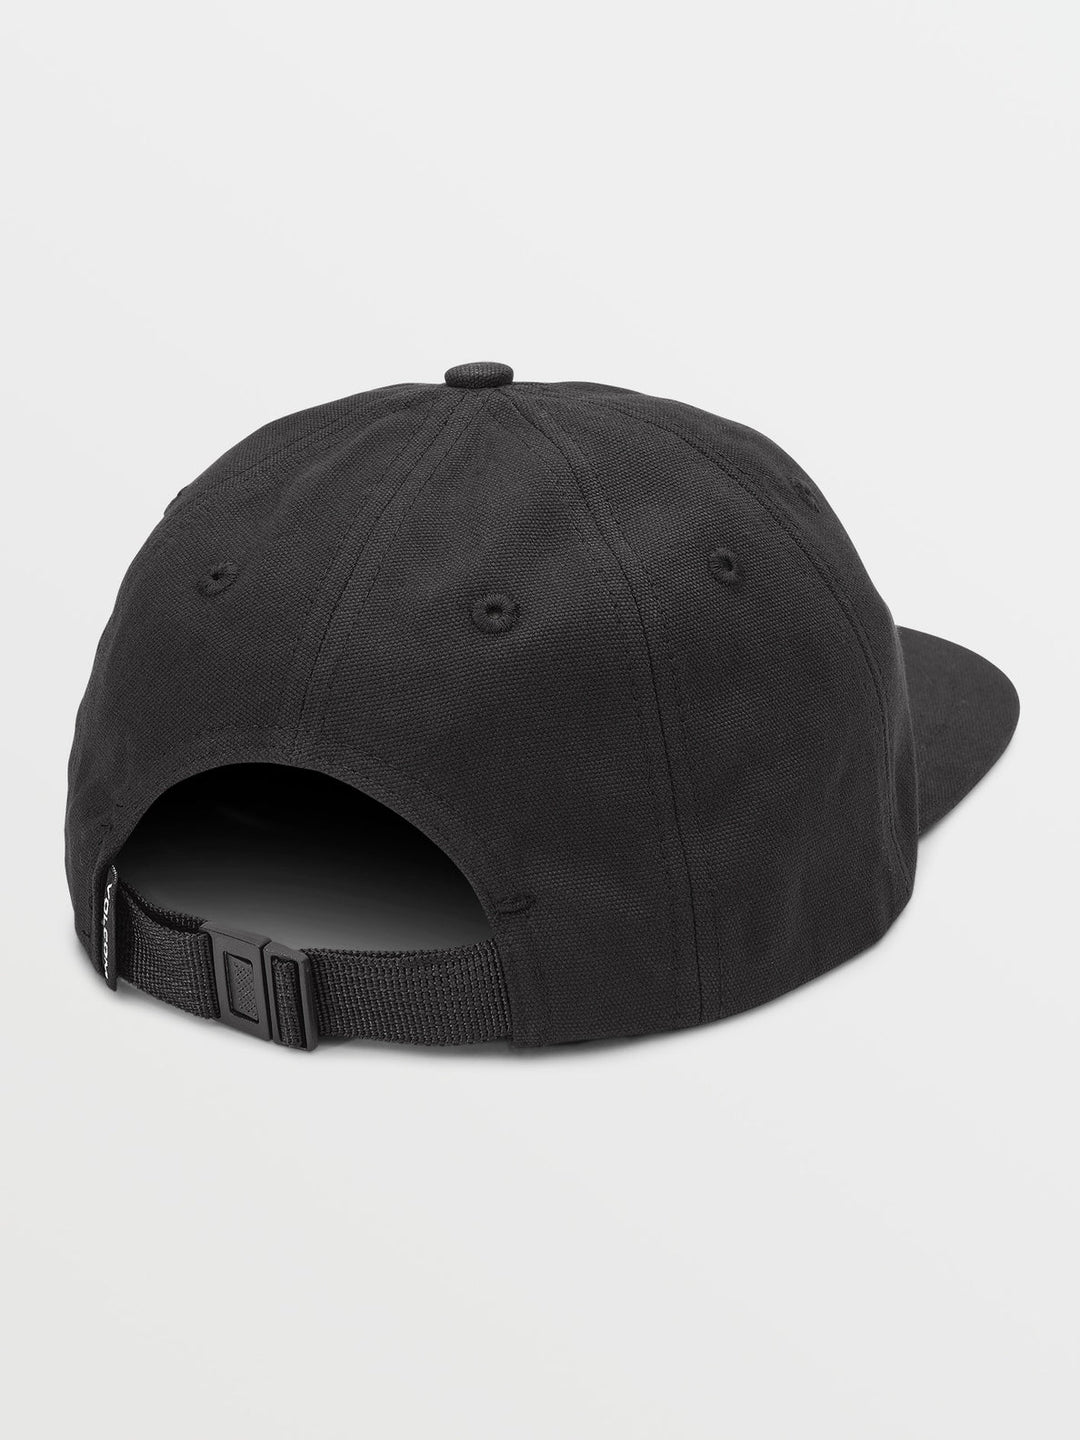 Volcom Ramp Stone Adjustable Hat - Black - Sun Diego Boardshop